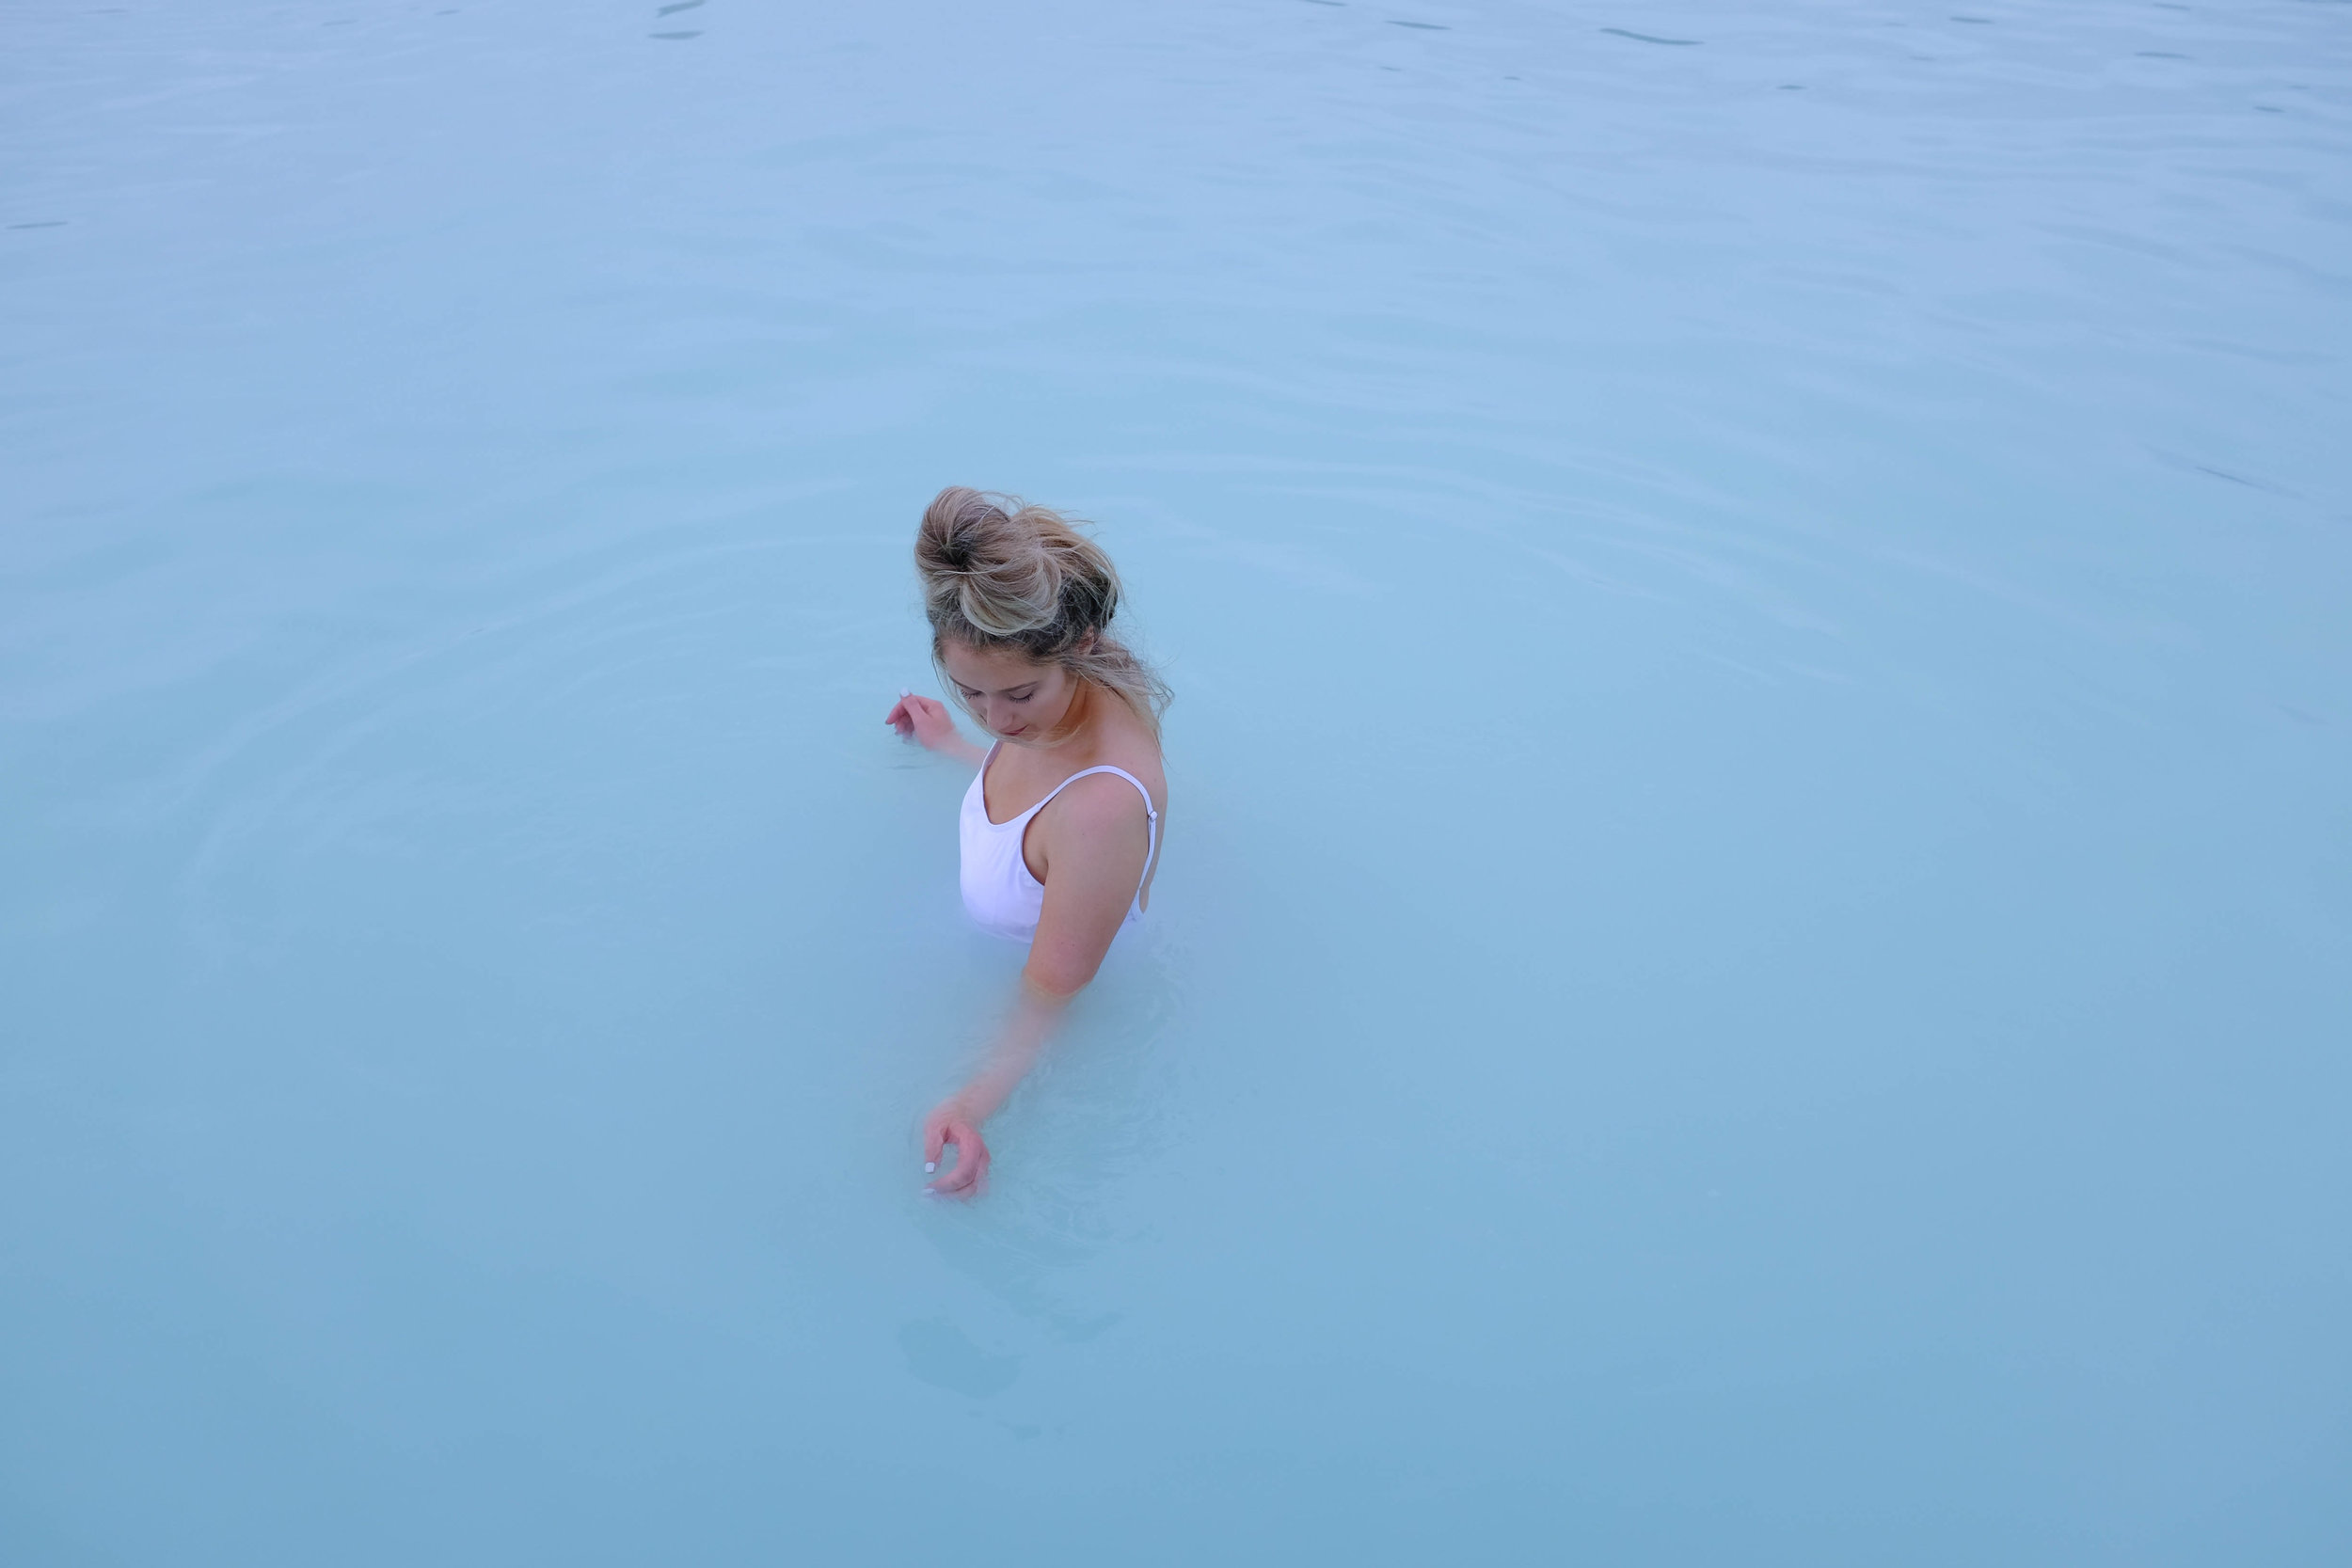 Kaci Nicole - Planning Your Iceland Itinerary